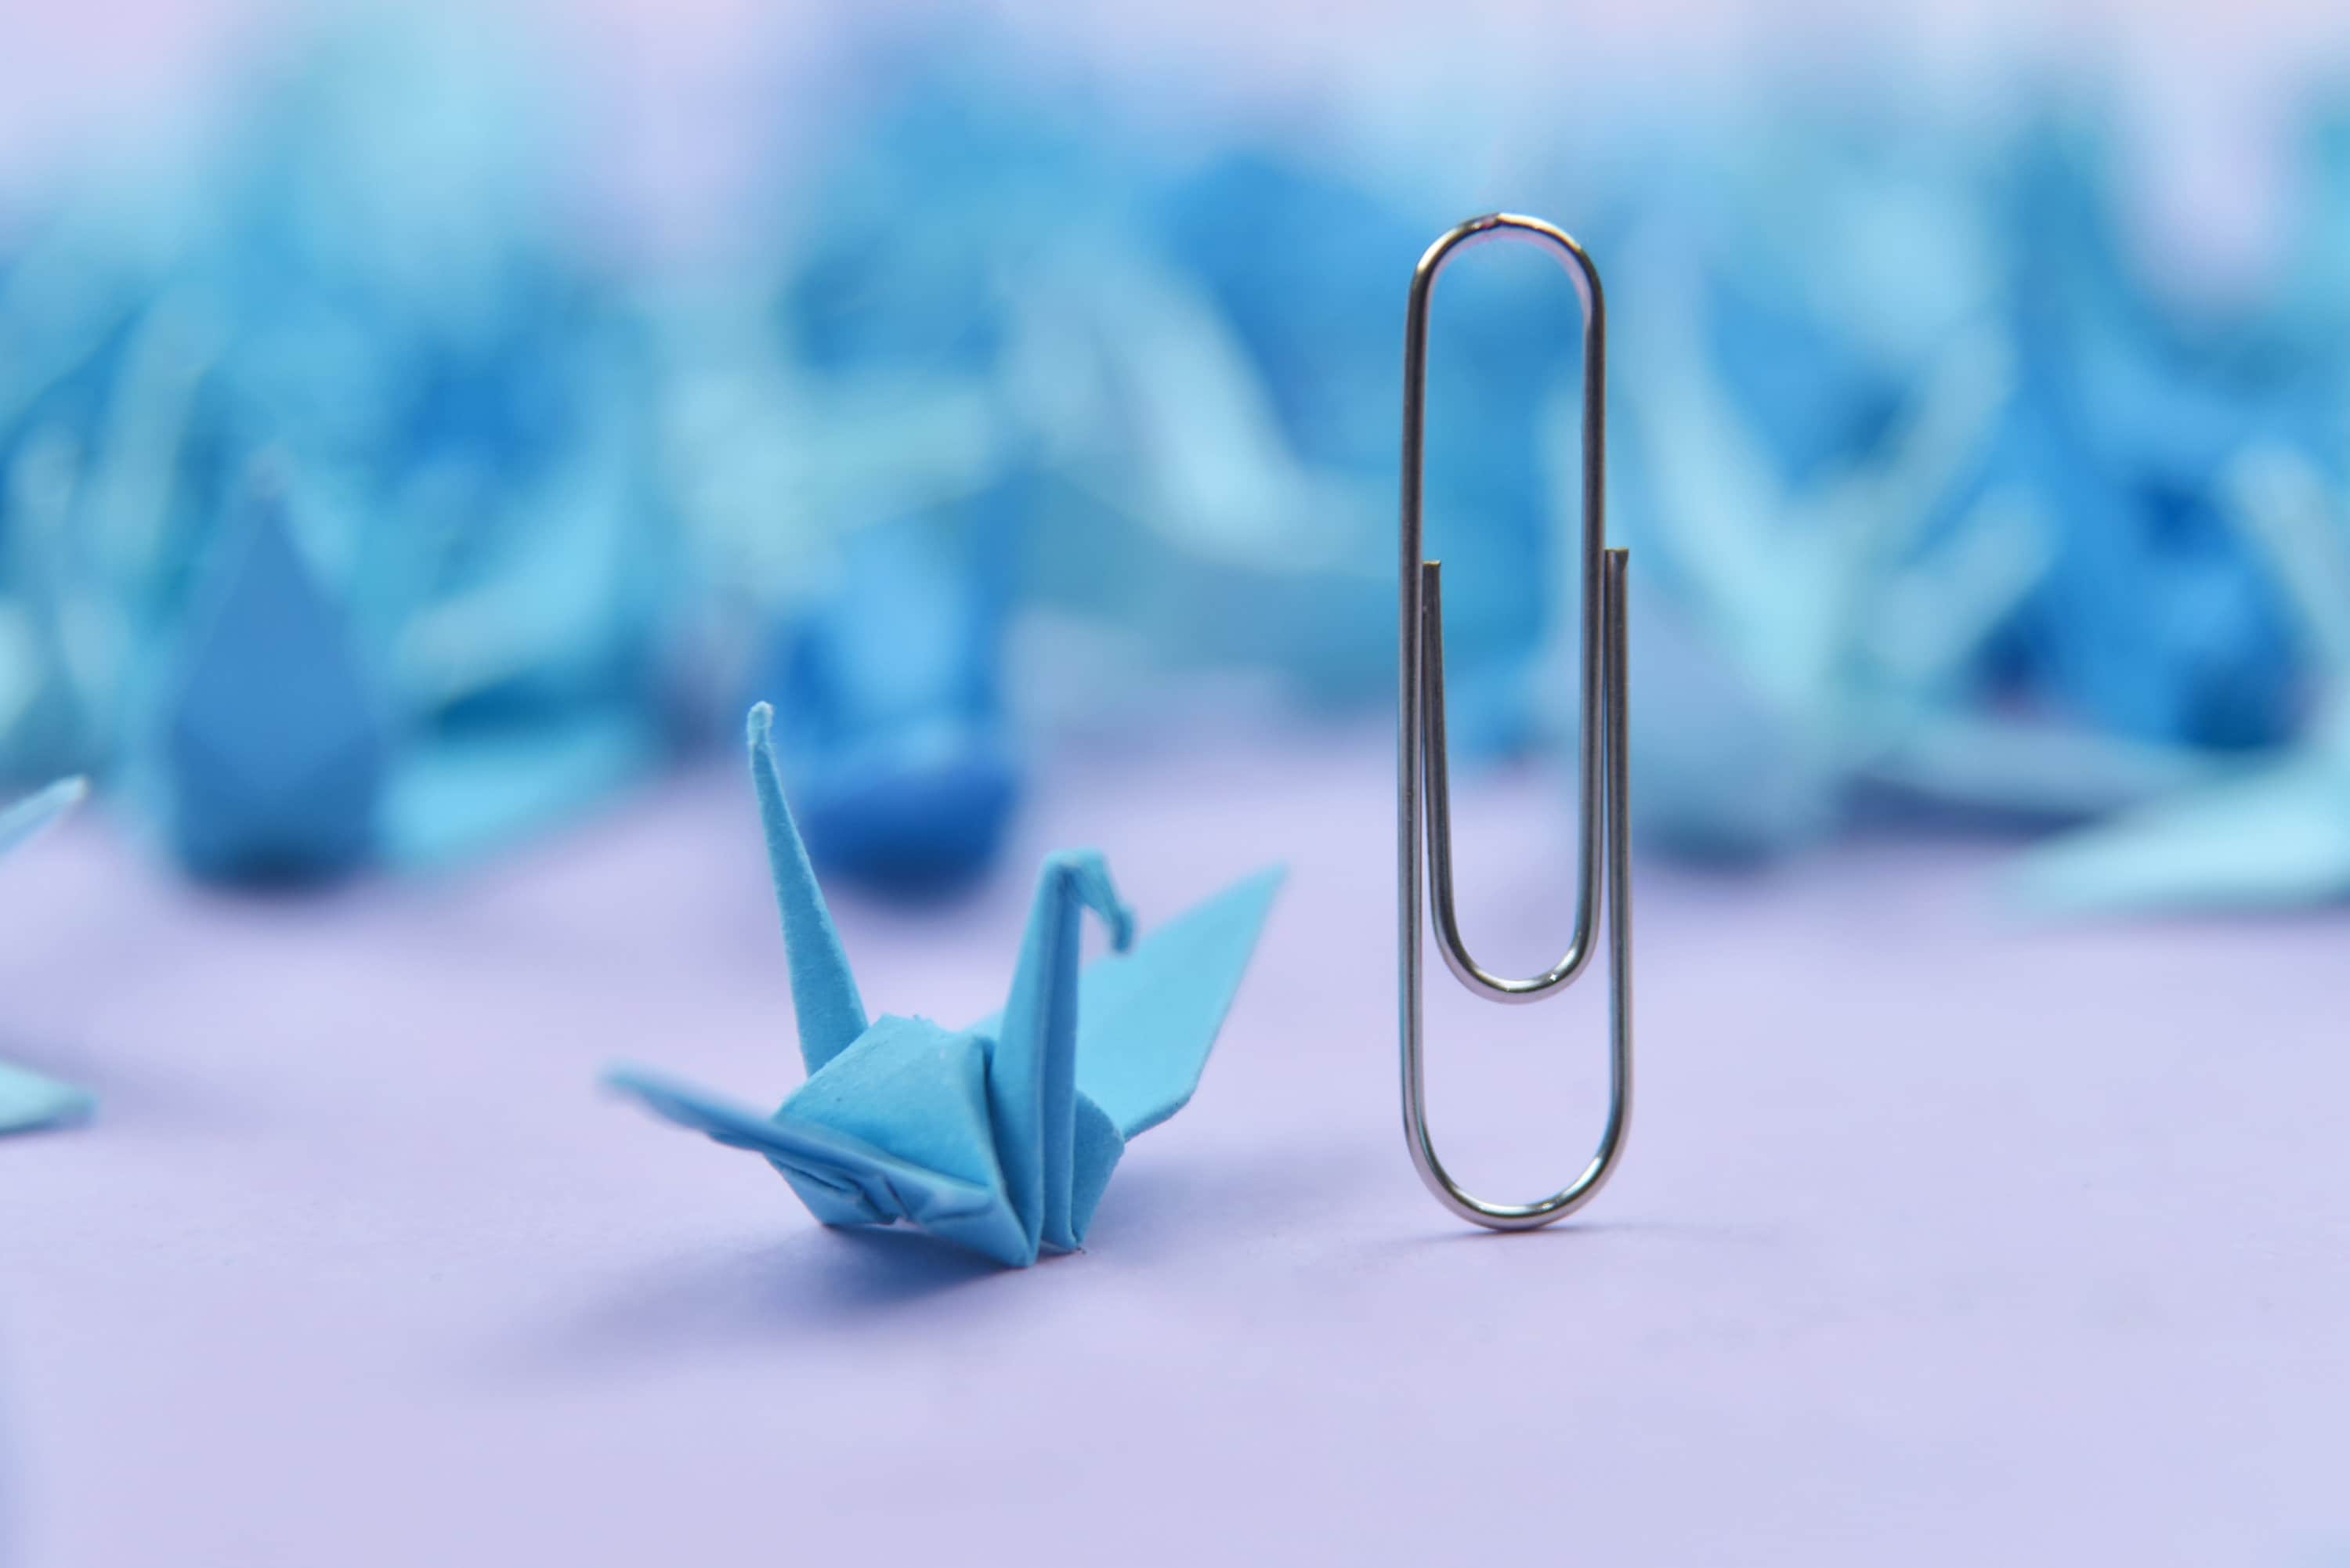 1000 Origami Paper Crane Blue Shade Tone Origami crane pequeña 1.5x1.5 pulgadas para decoración de bodas, regalo de aniversario, San Valentín